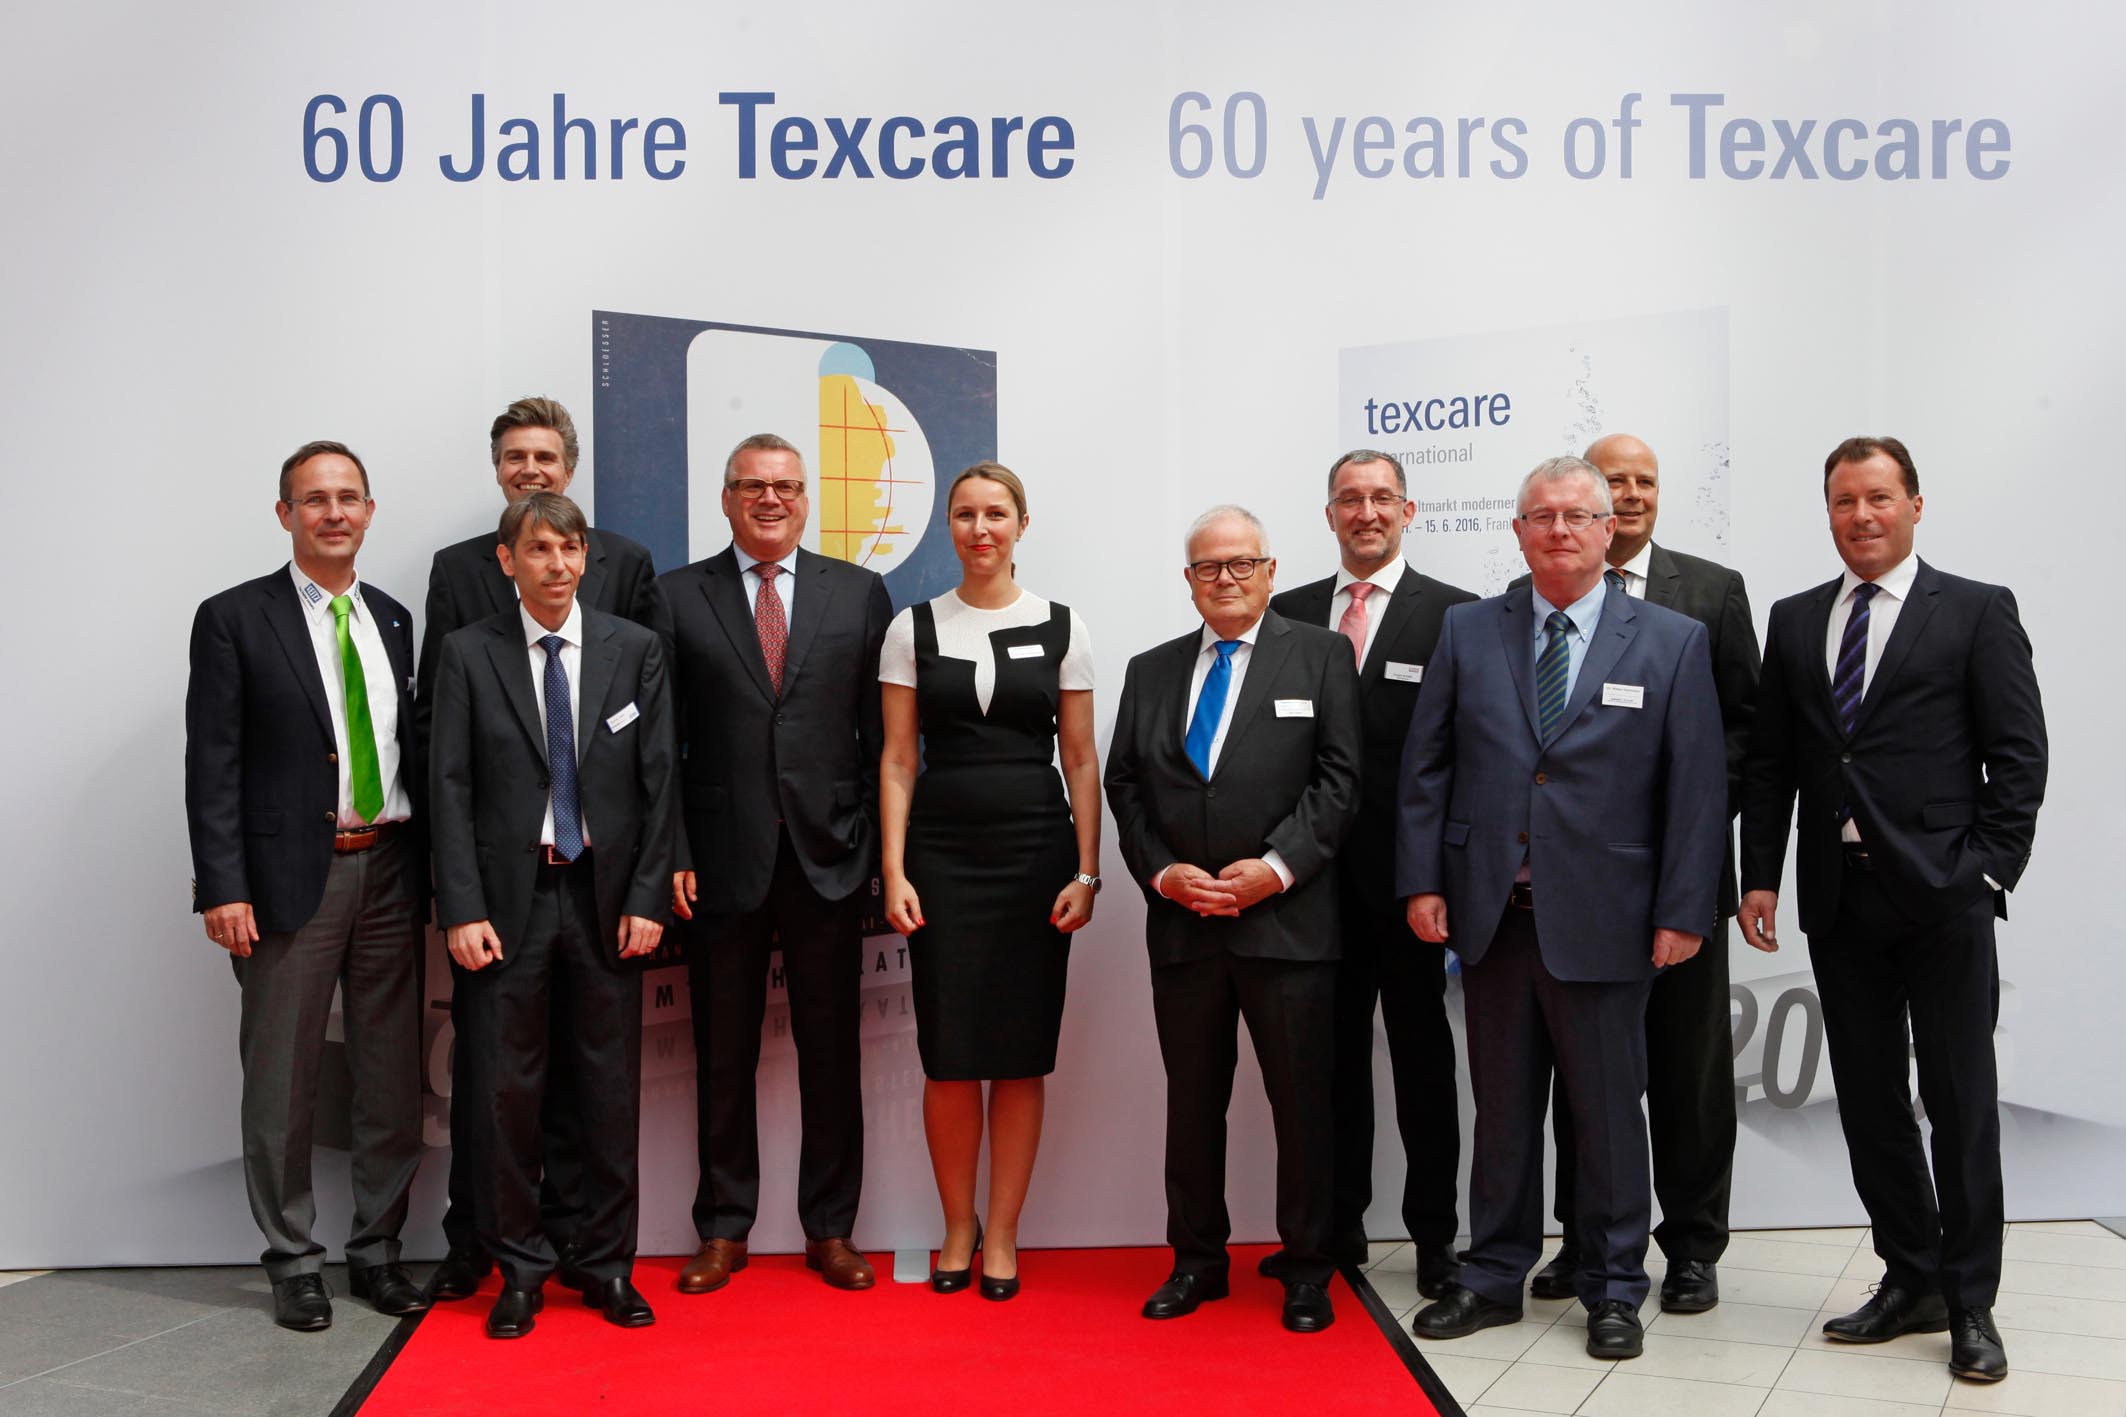 Texcare international 2016Messe Frankfurt Exhibition GmbH